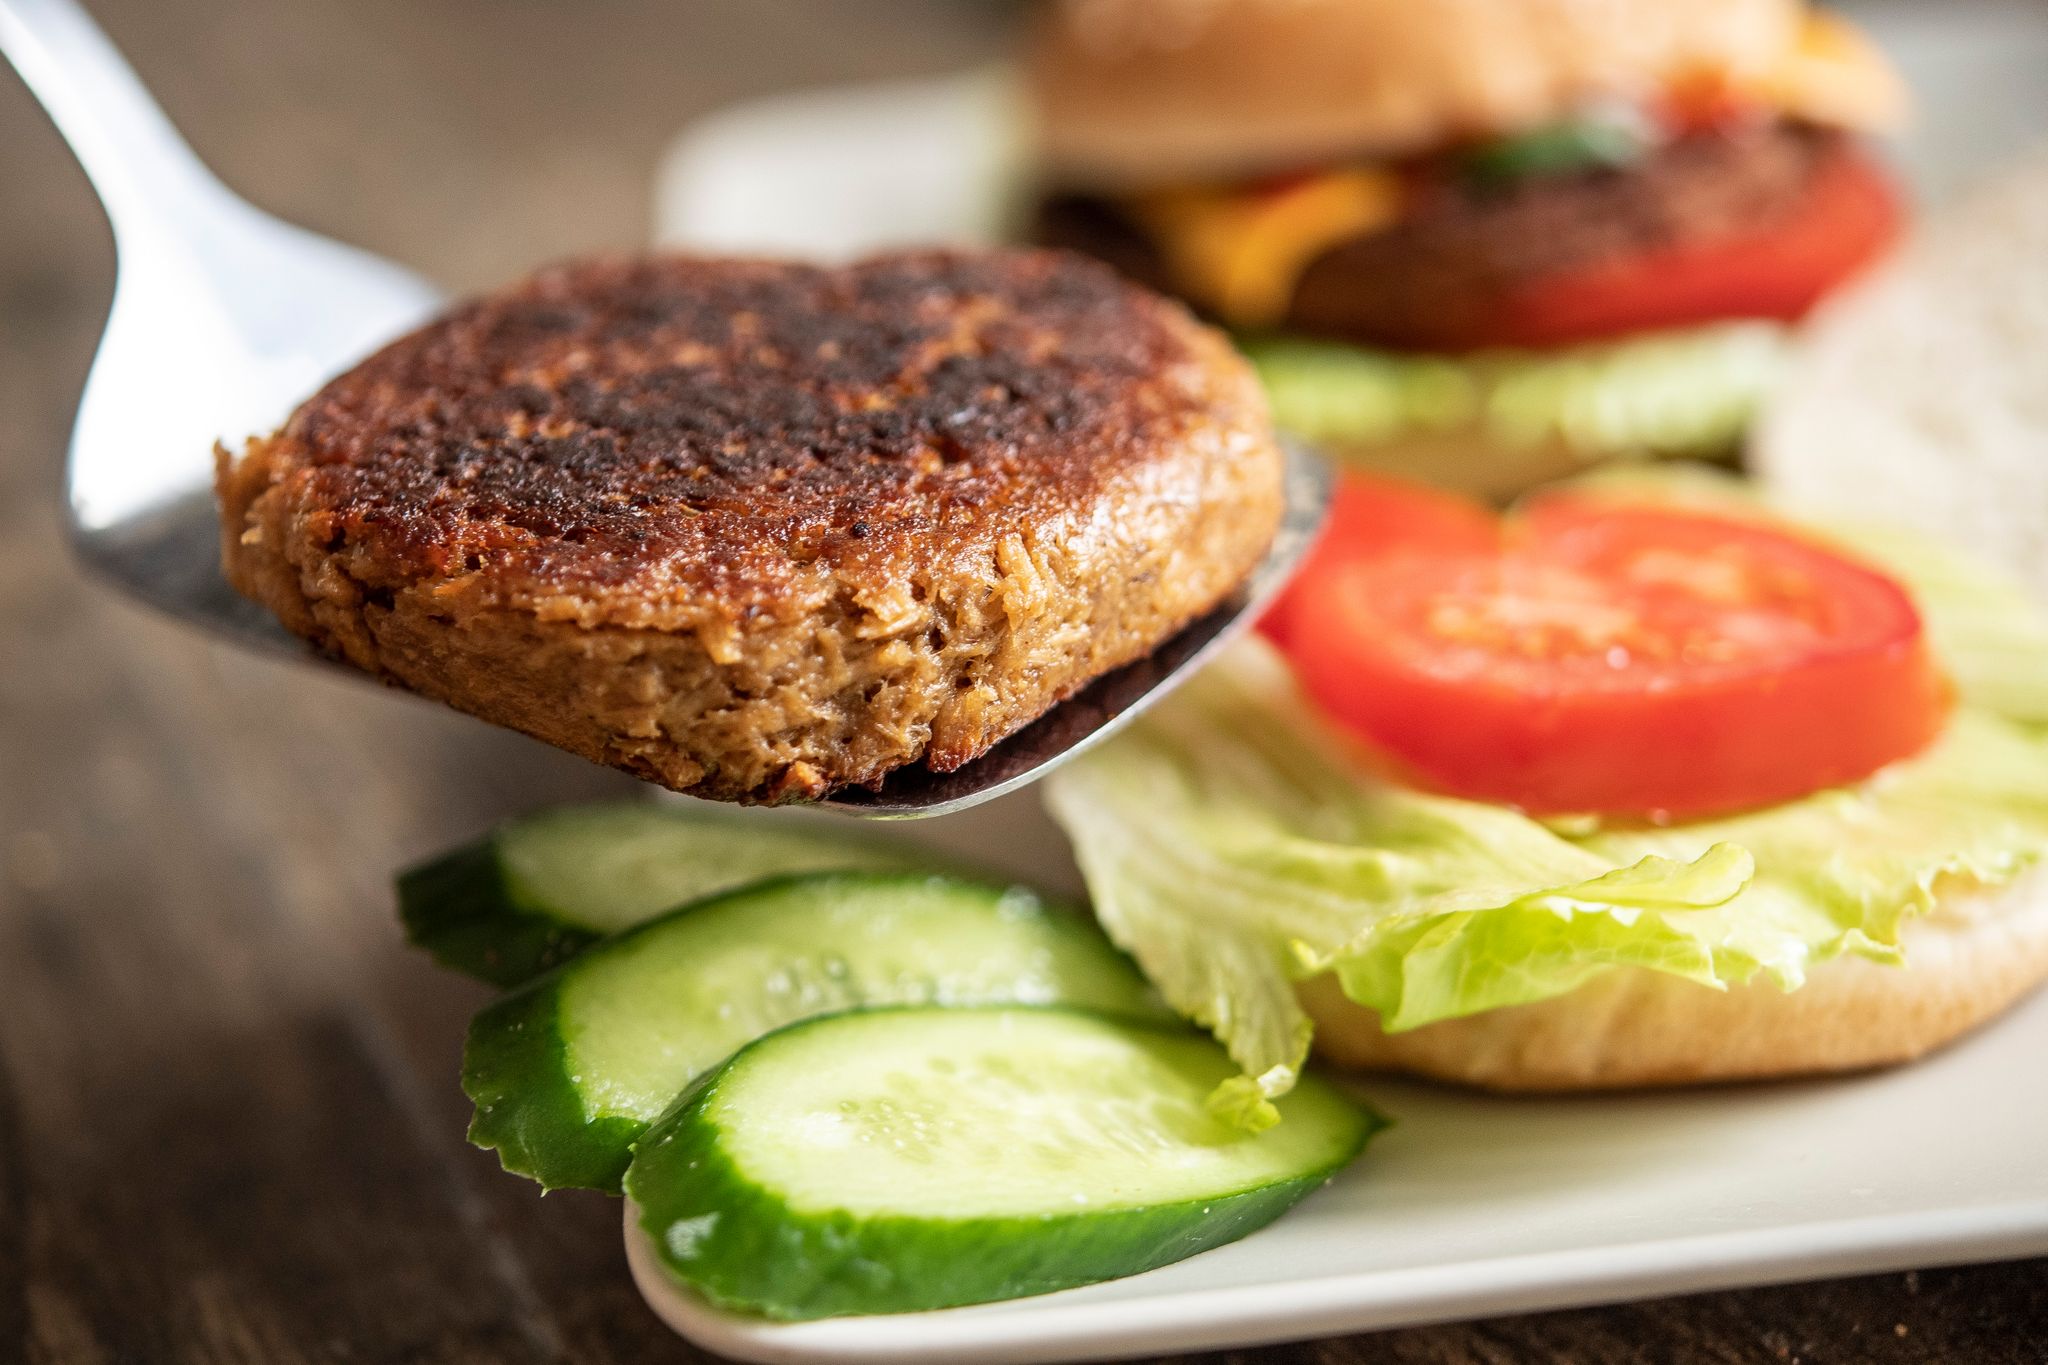 La hamburguesa vegetariana puede deshacerse si se la da vuelta demasiado pronto al freírla (Foto: Robert Günther/dpa)